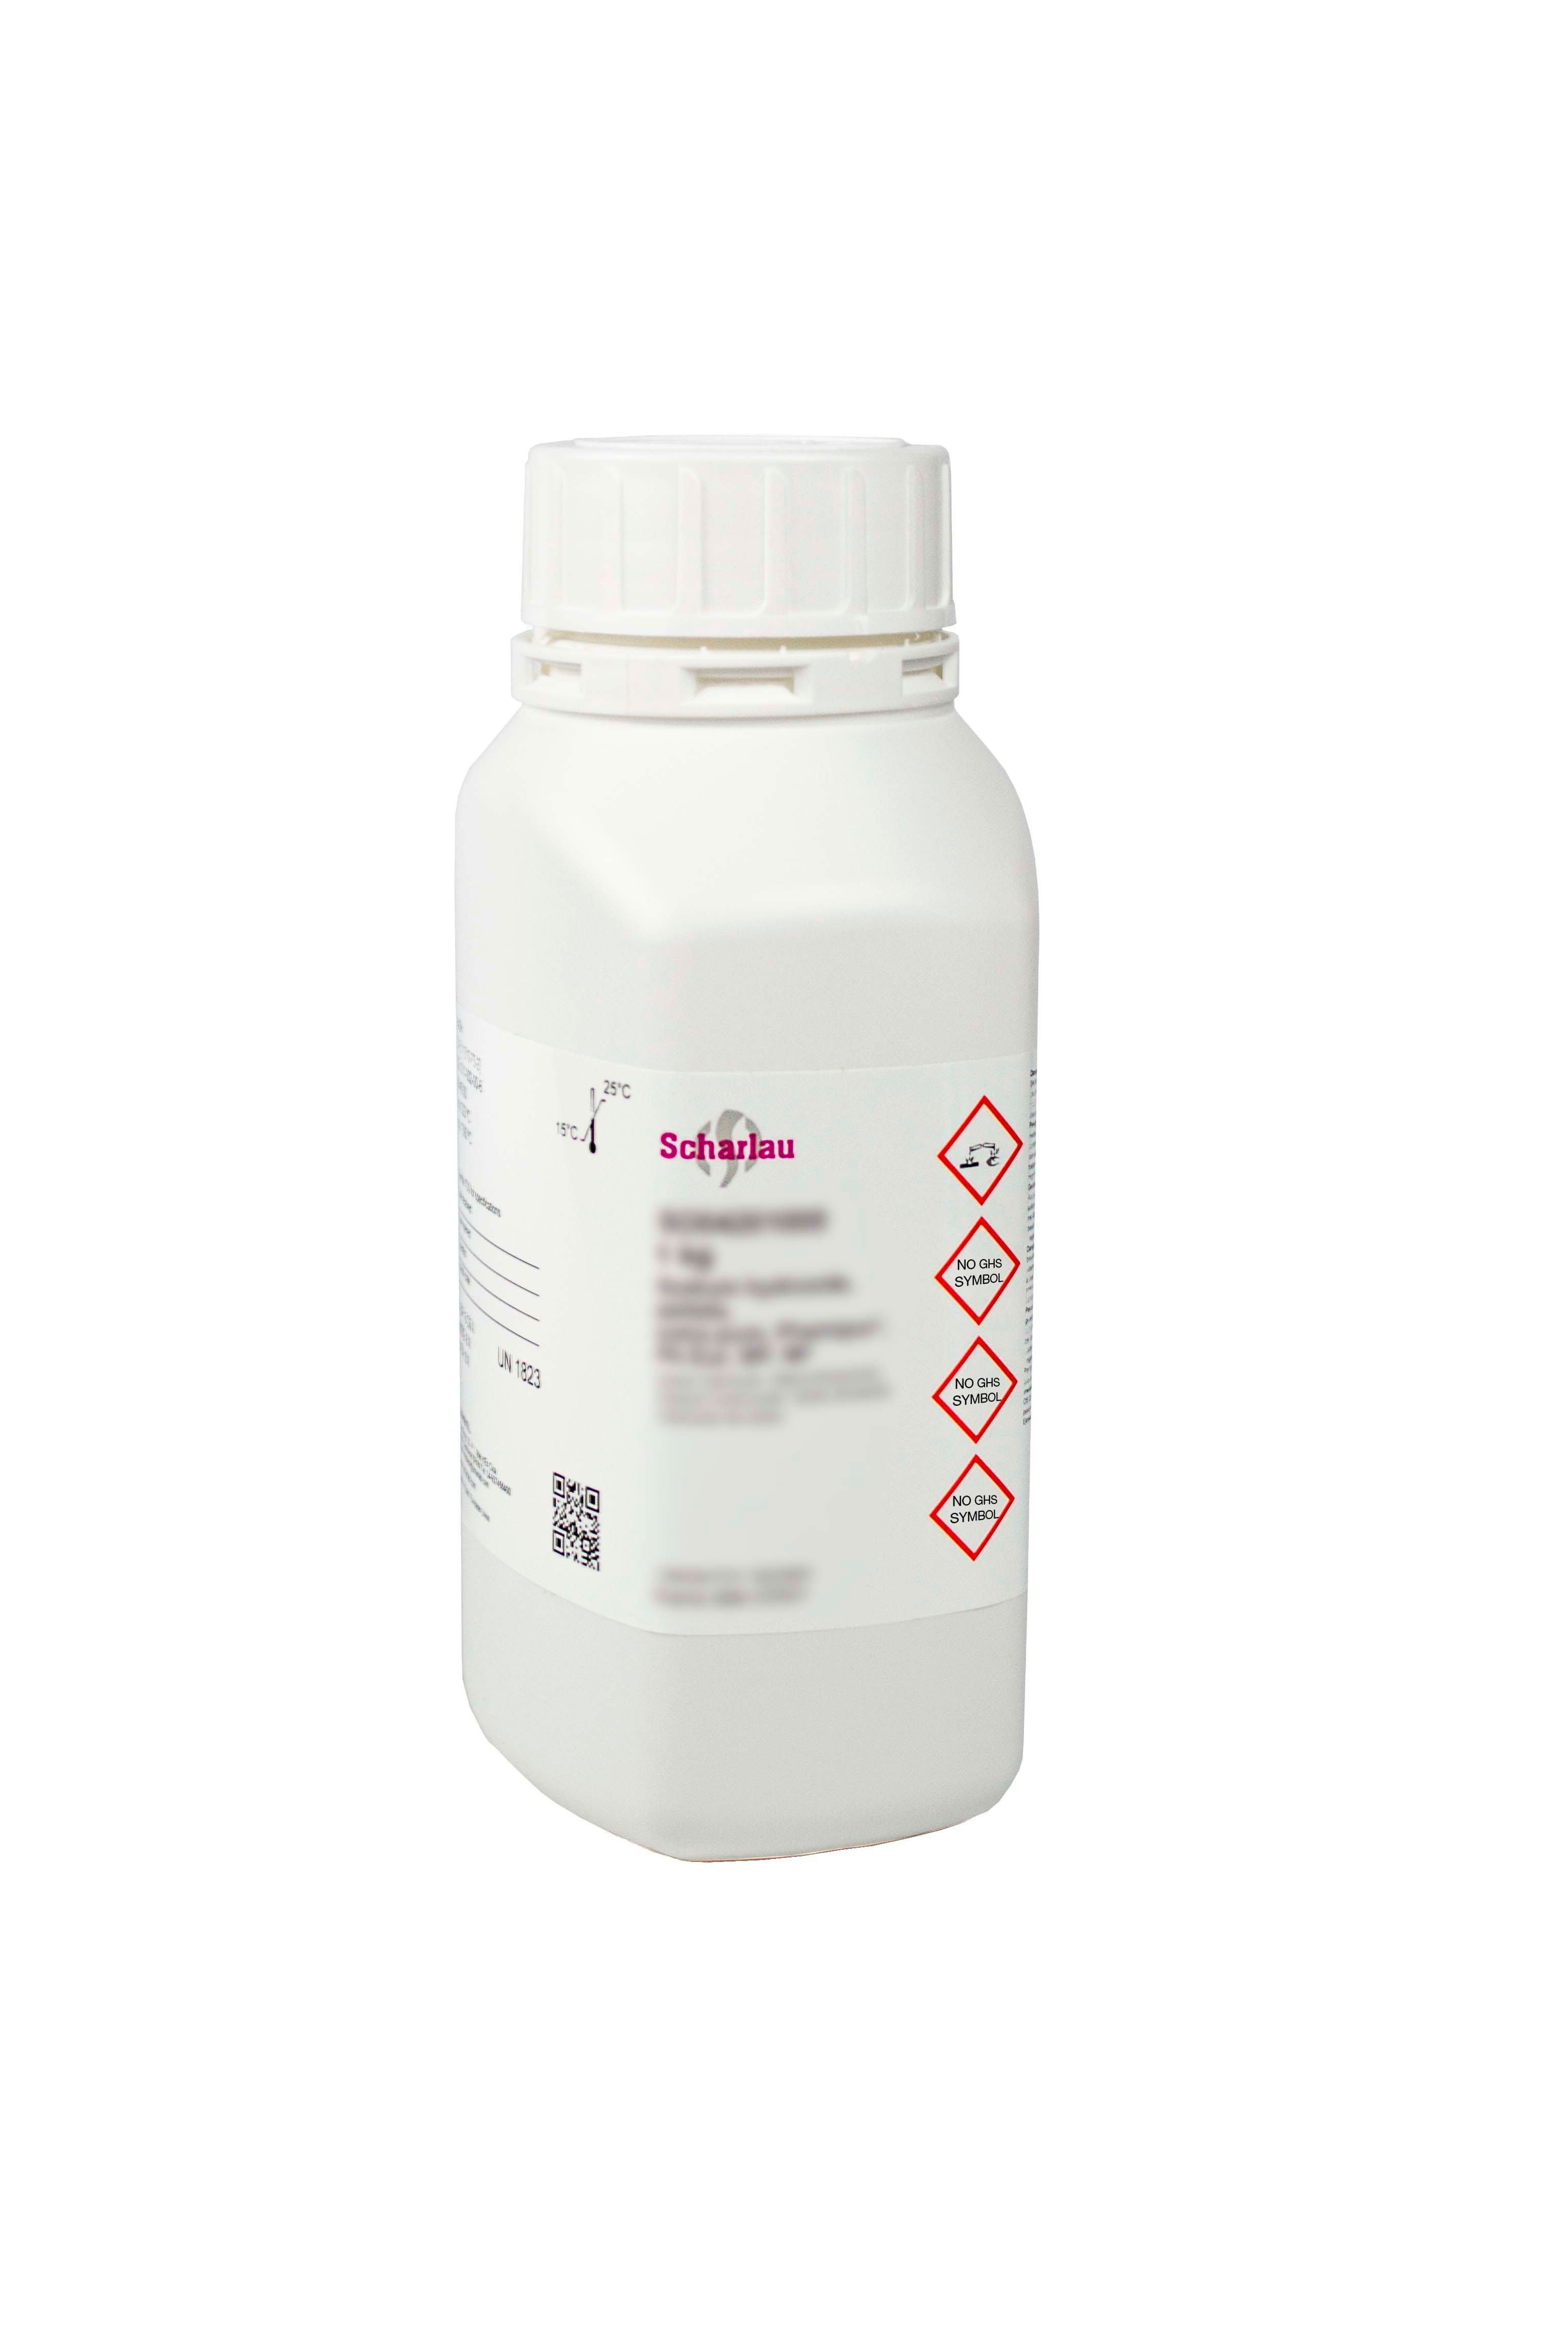 Calcio sulfato dihidrato, Pharmpur®, Ph Eur, BP, NF